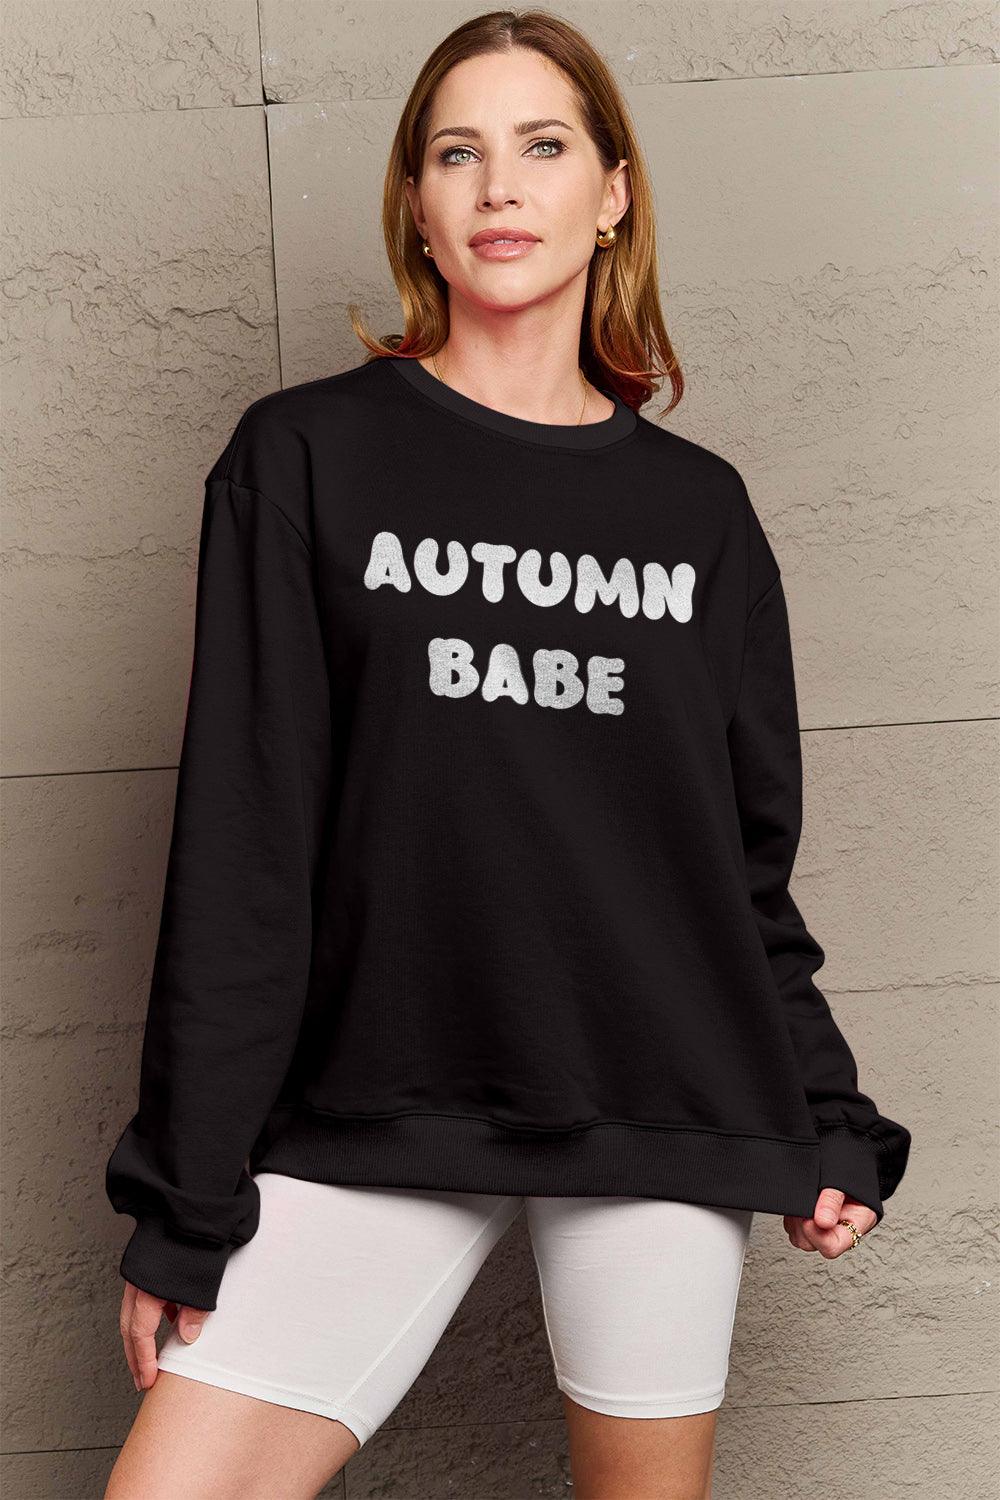 Simply Love Full Size AUTUMN BABE Graphic Sweatshirt - Immenzive